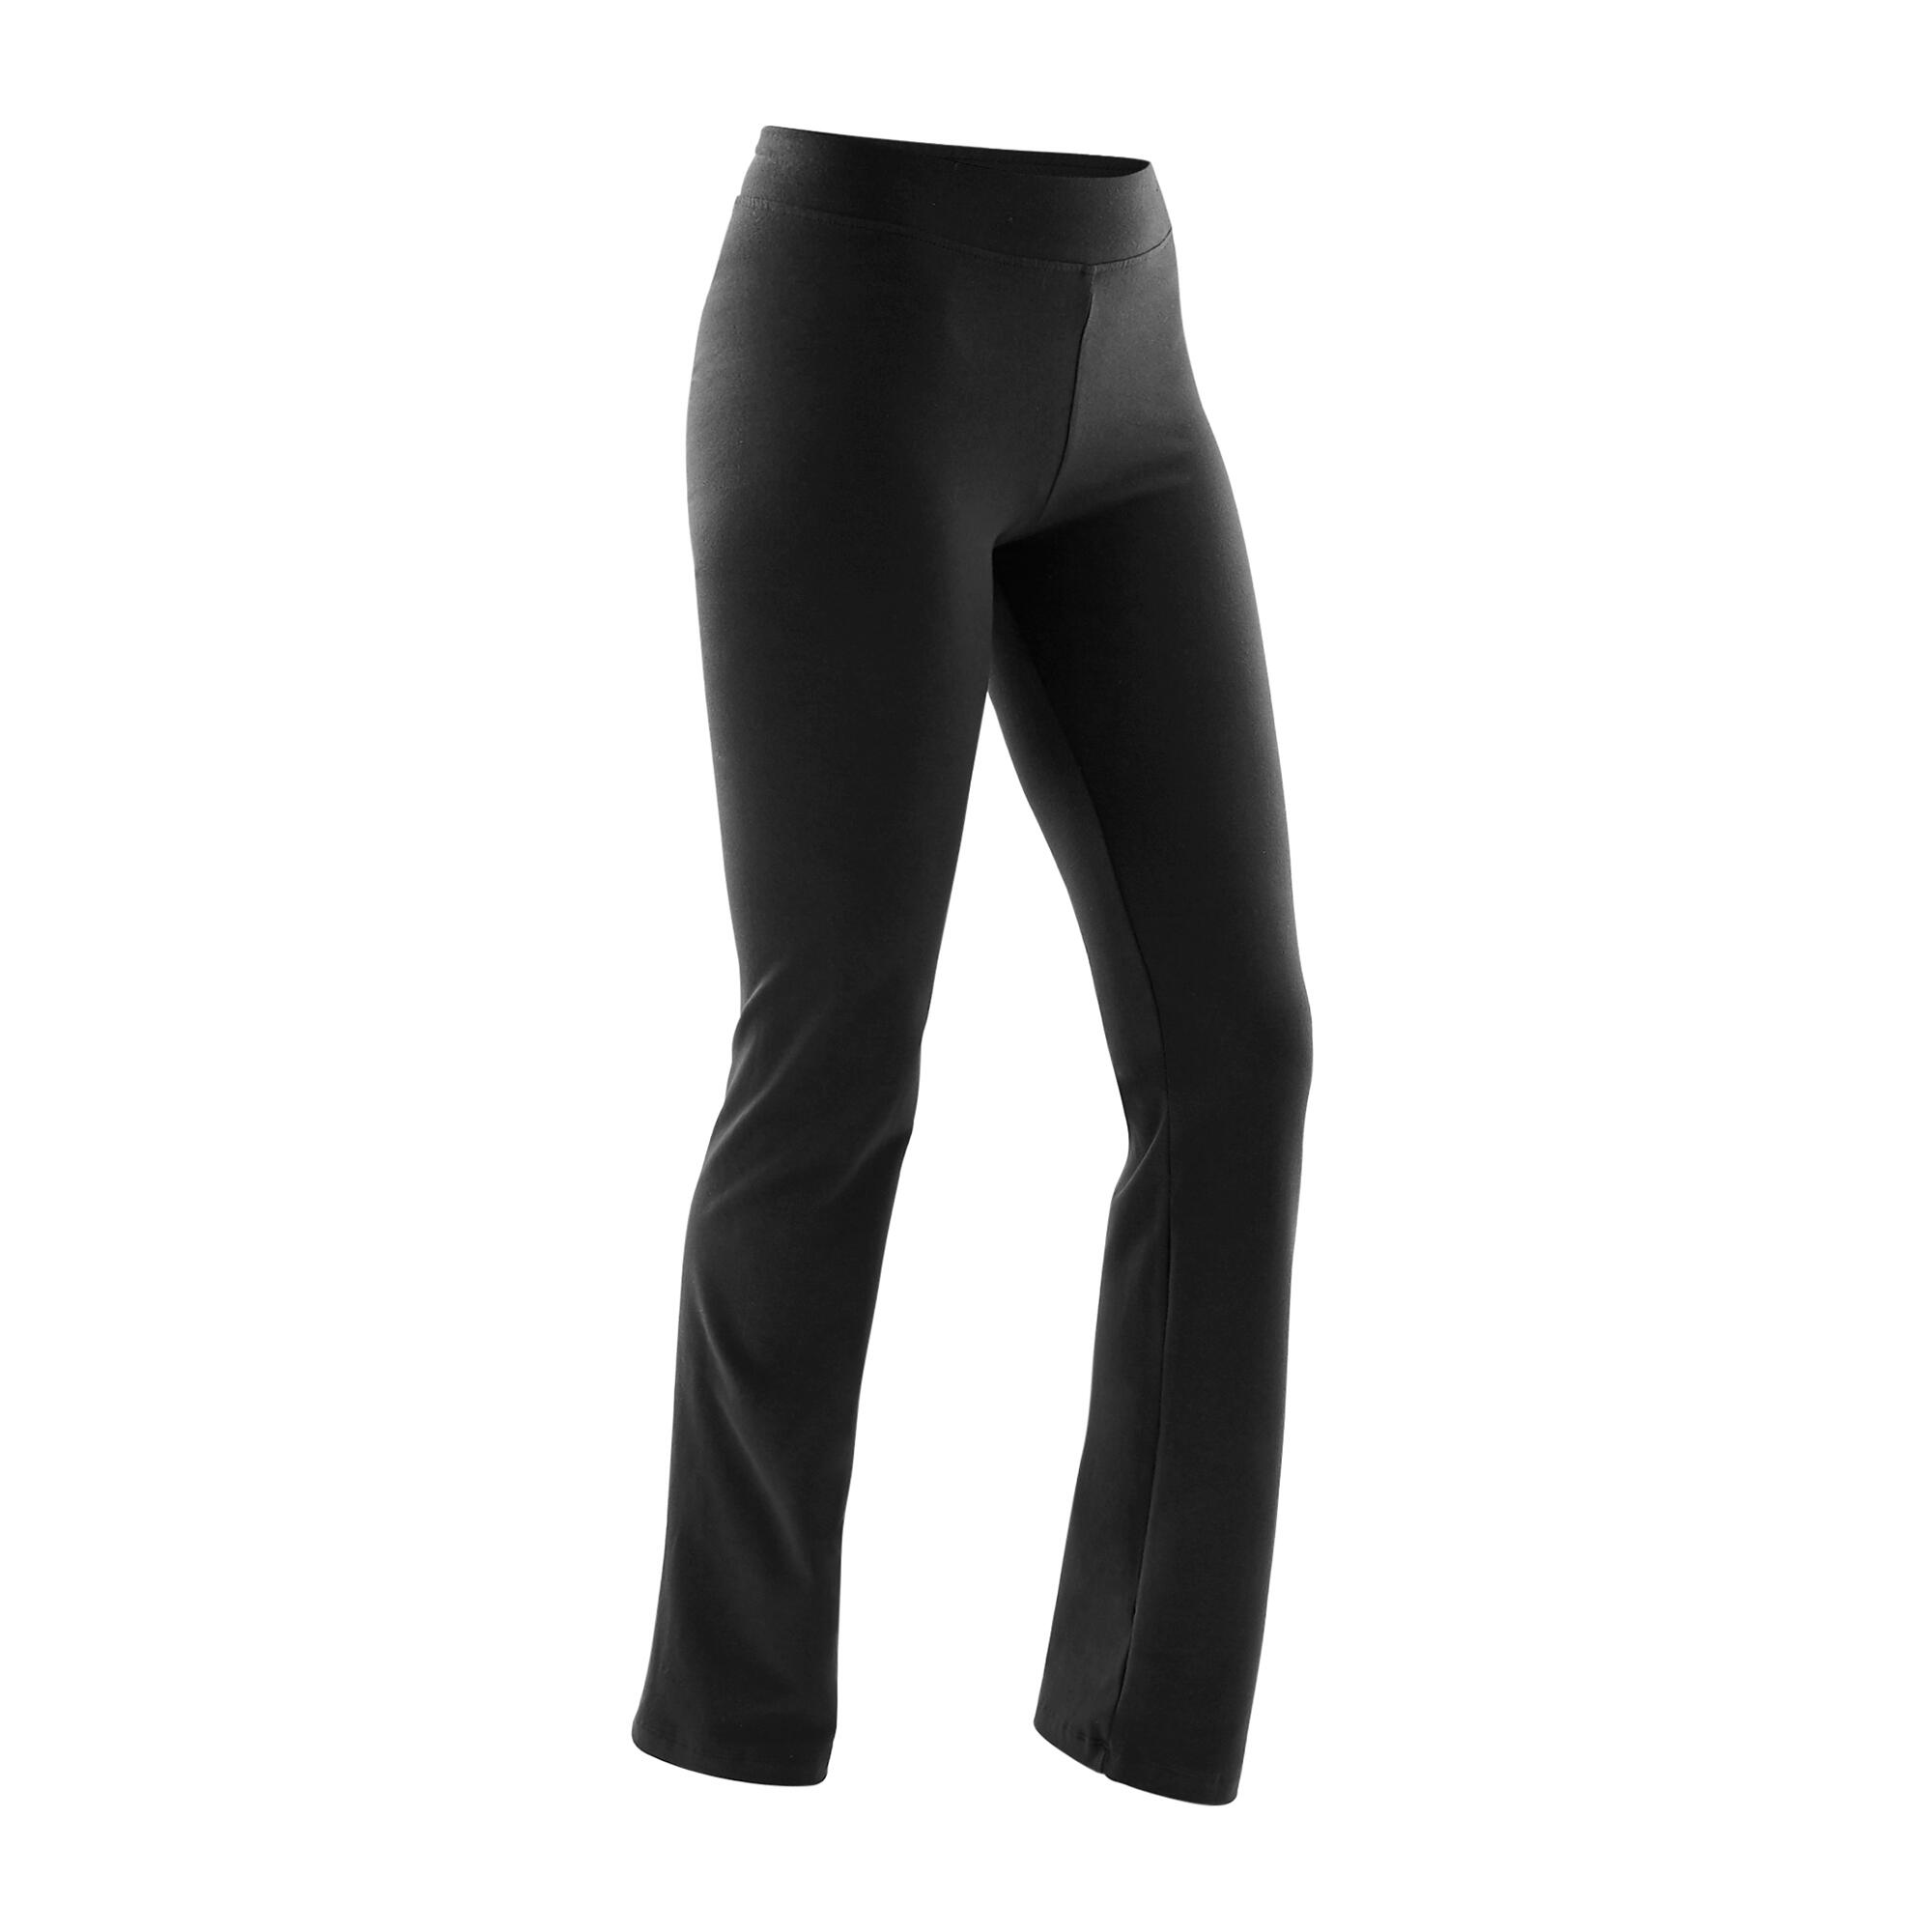 Pantalon de sport femme – 100 noir - Noir - Domyos - Décathlon